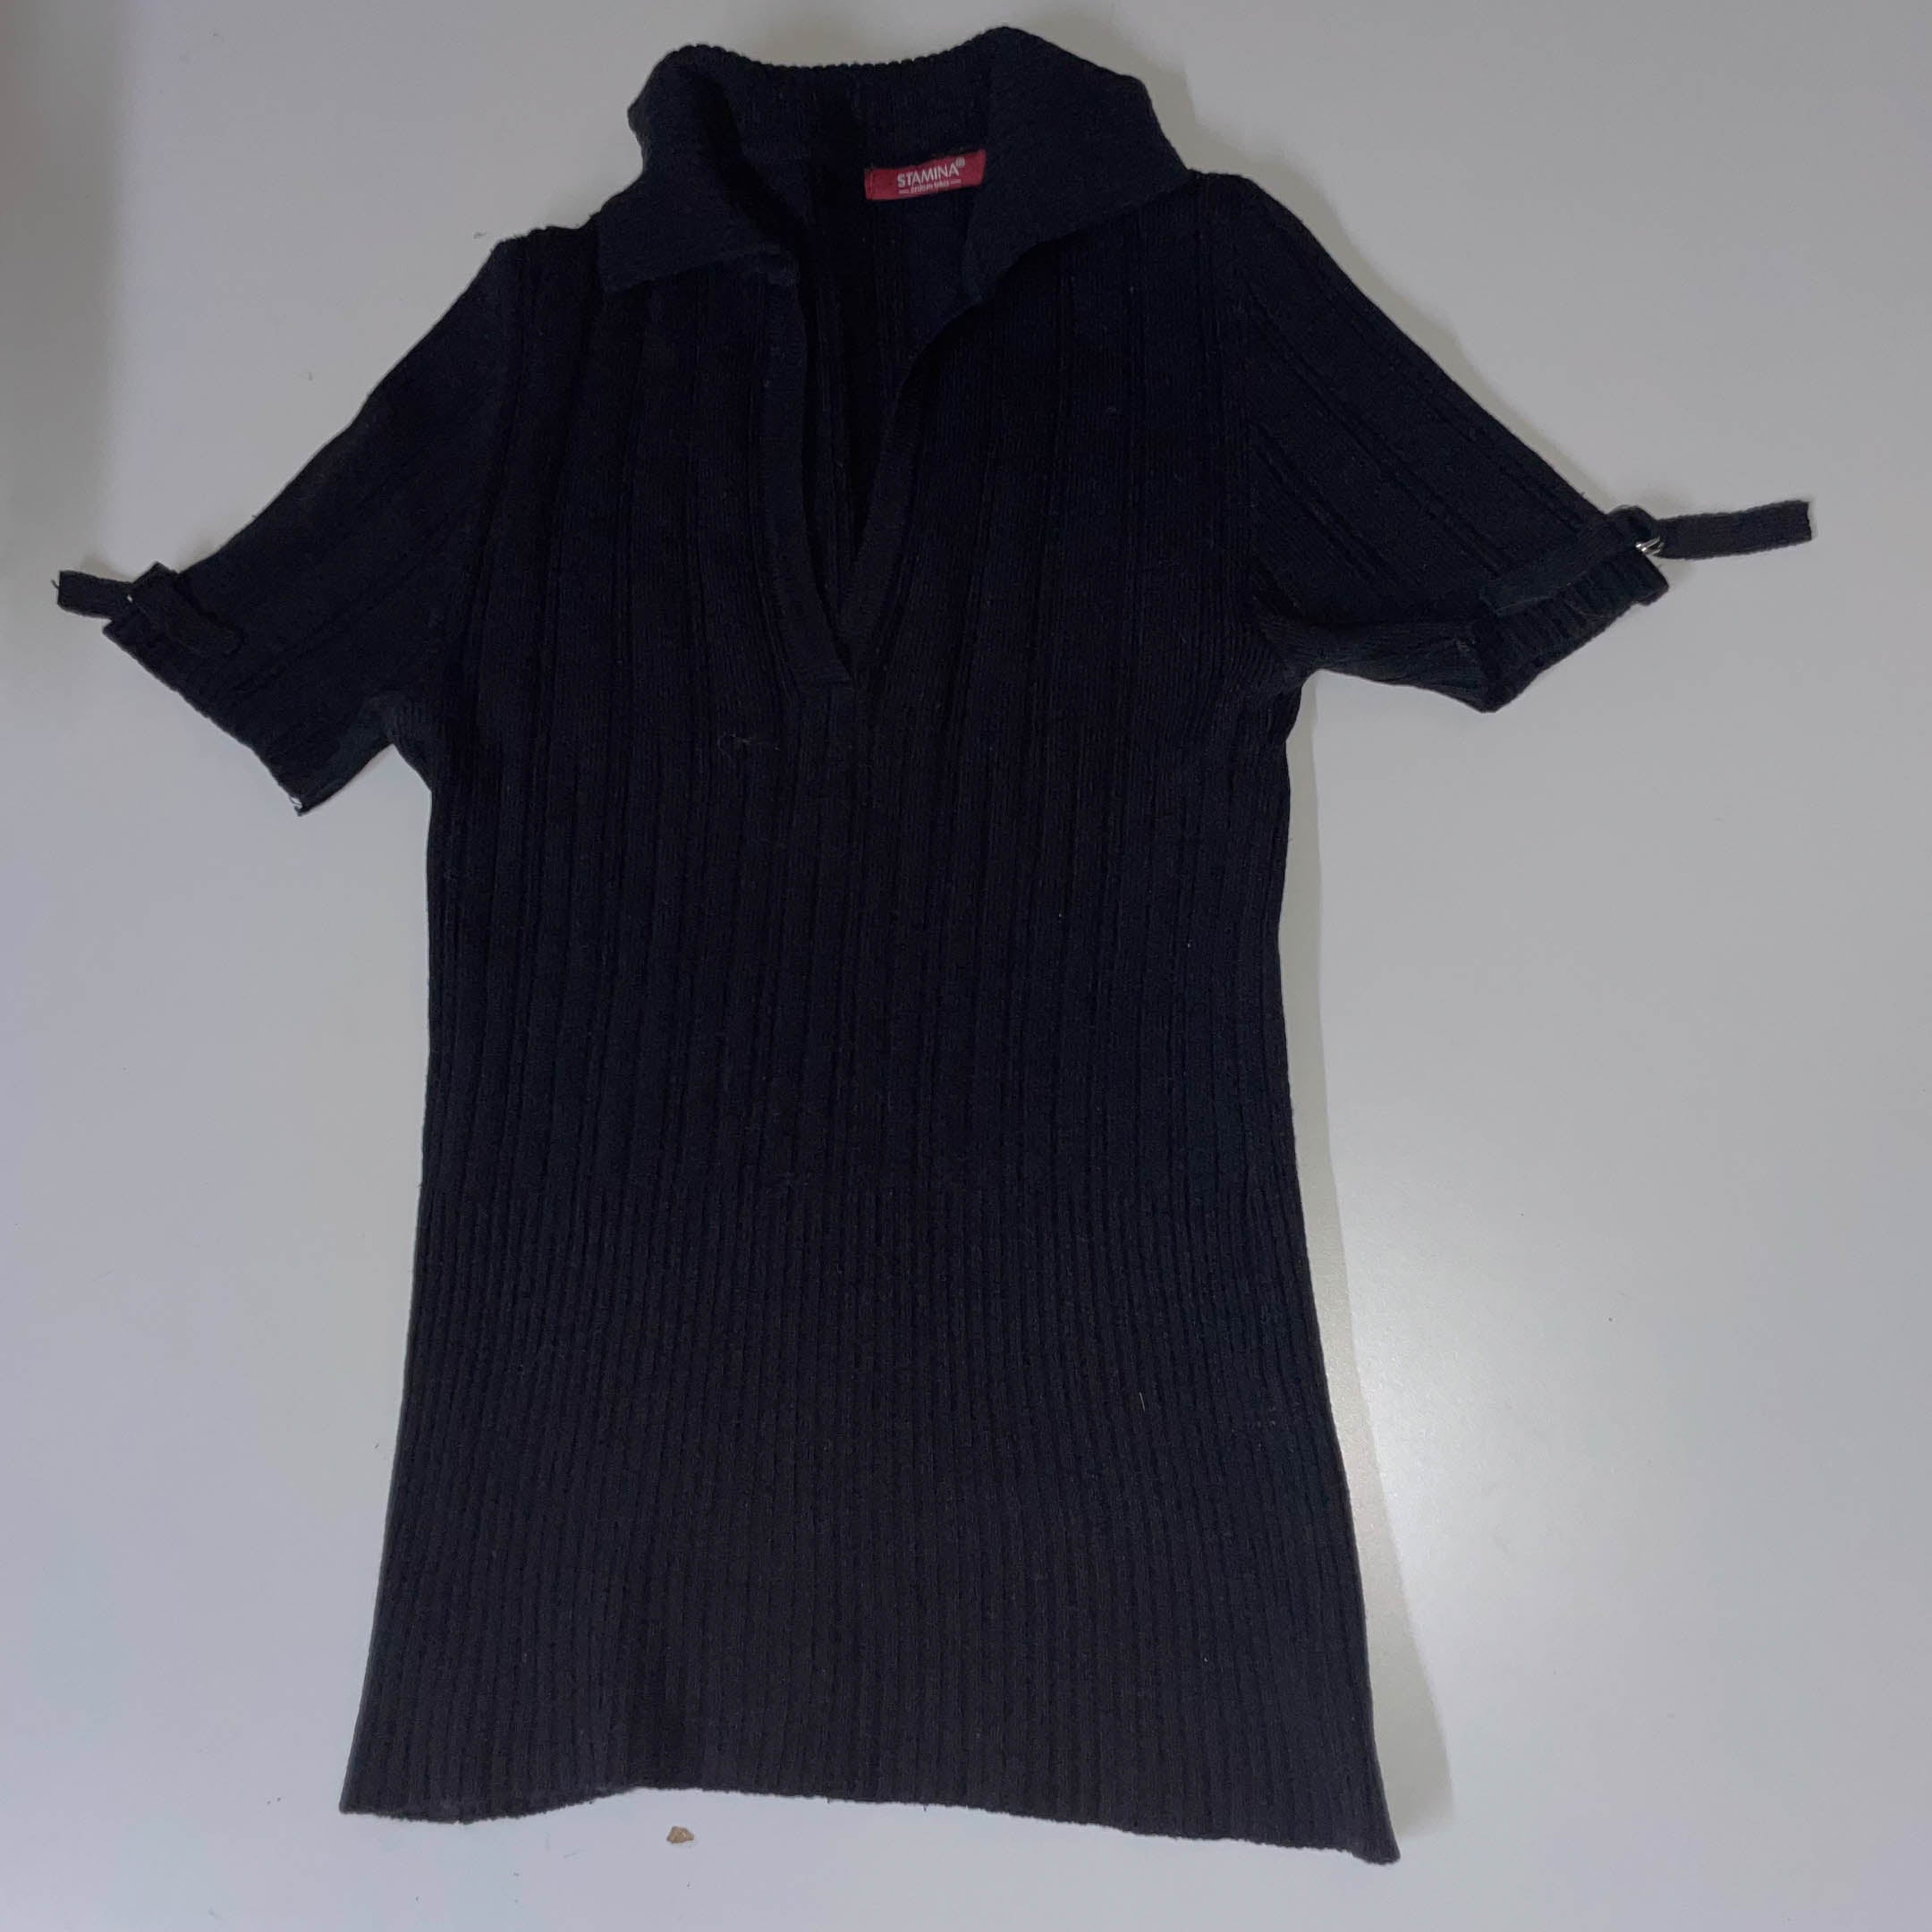 Vintage womens Stamina black knitted short sleeve dress top in M| SKU 3718